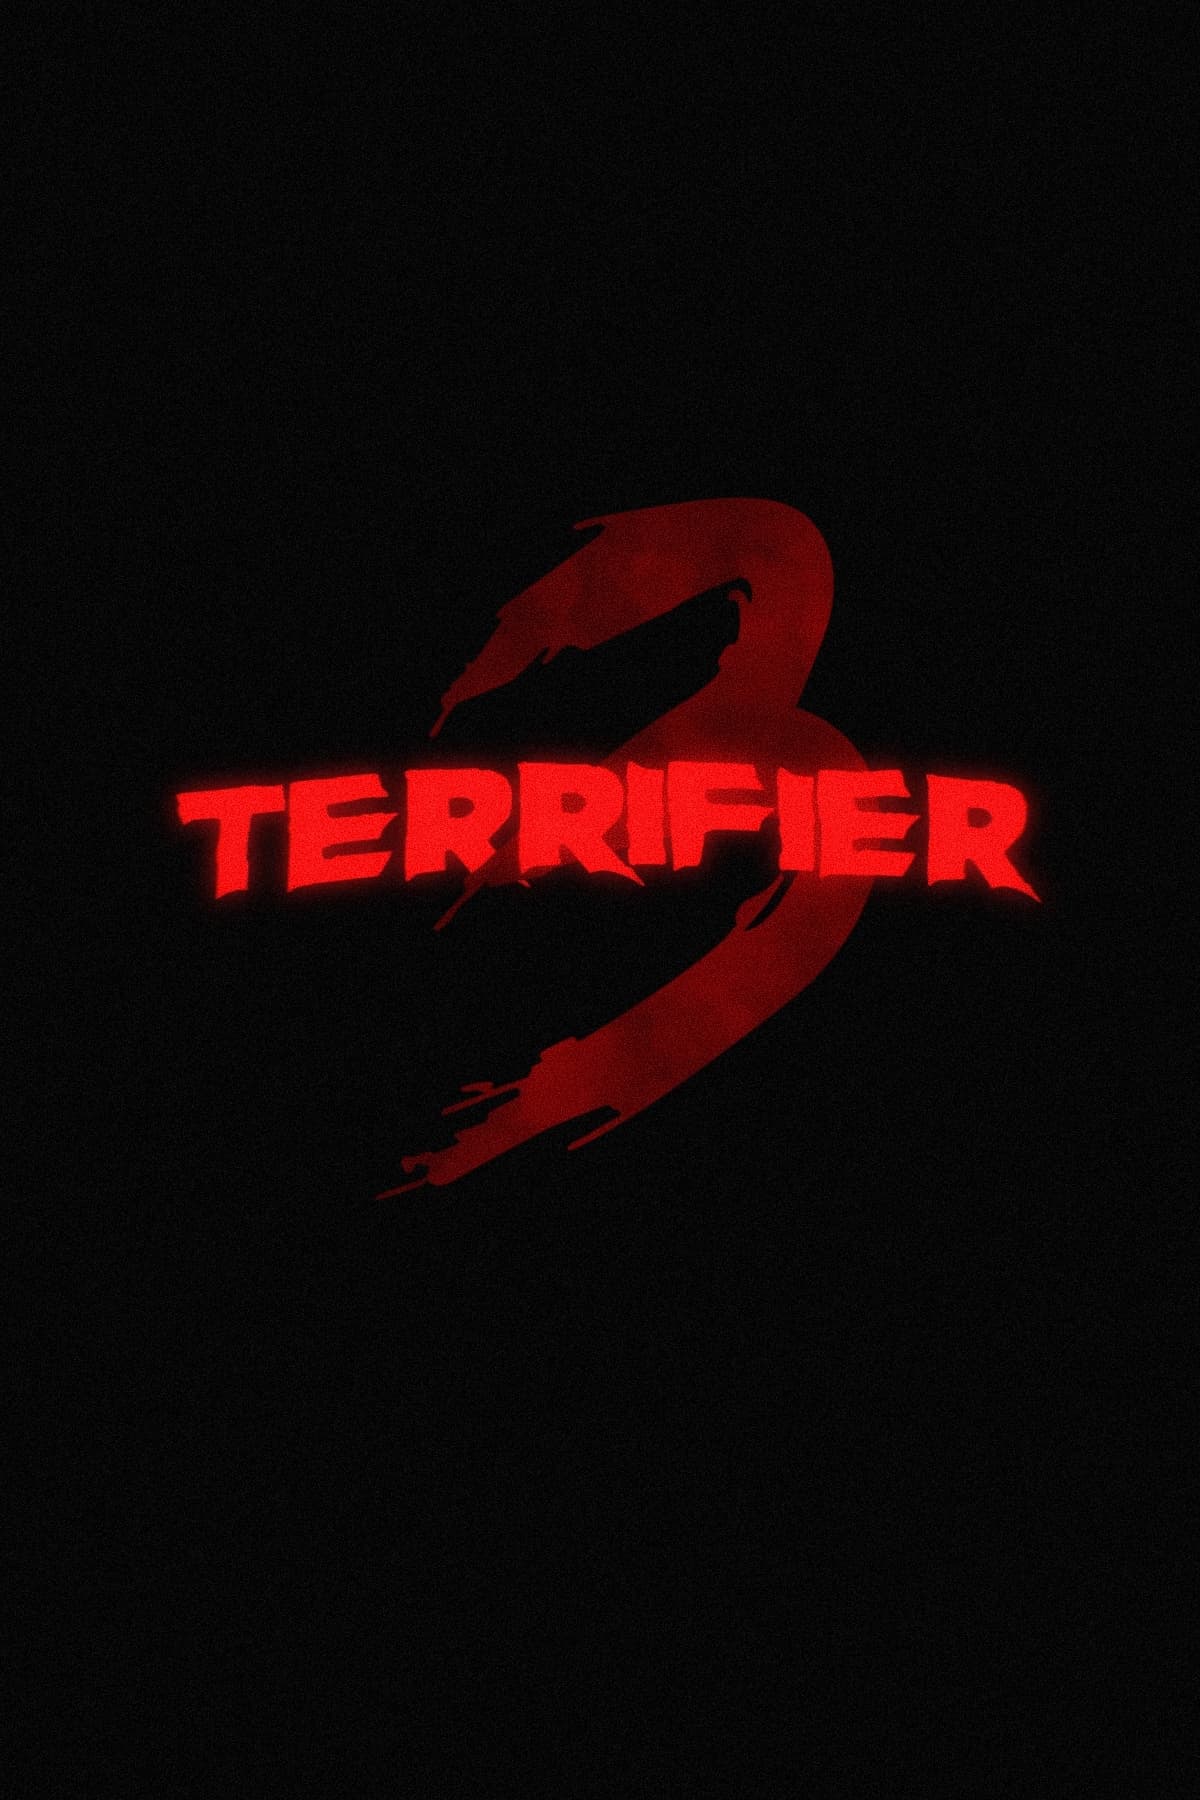 Poster for the movie "Terrifier 3"